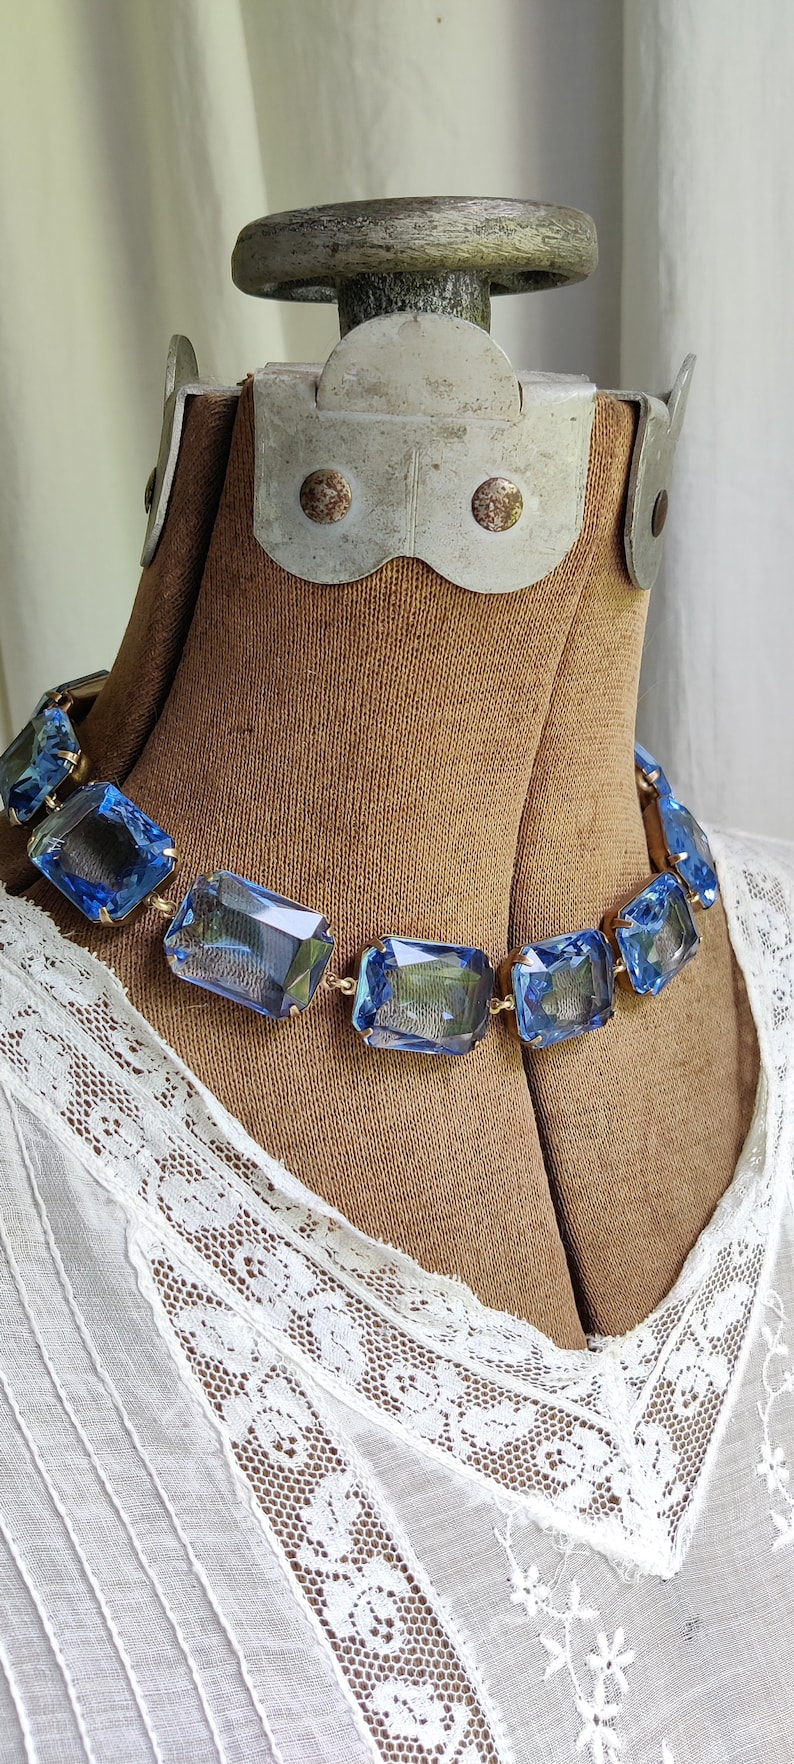 Chunky Blue statement necklace, Anna Wintour collet necklace, Georgian necklace, Georgian jewelry, Sapphire necklace. Blue image 1